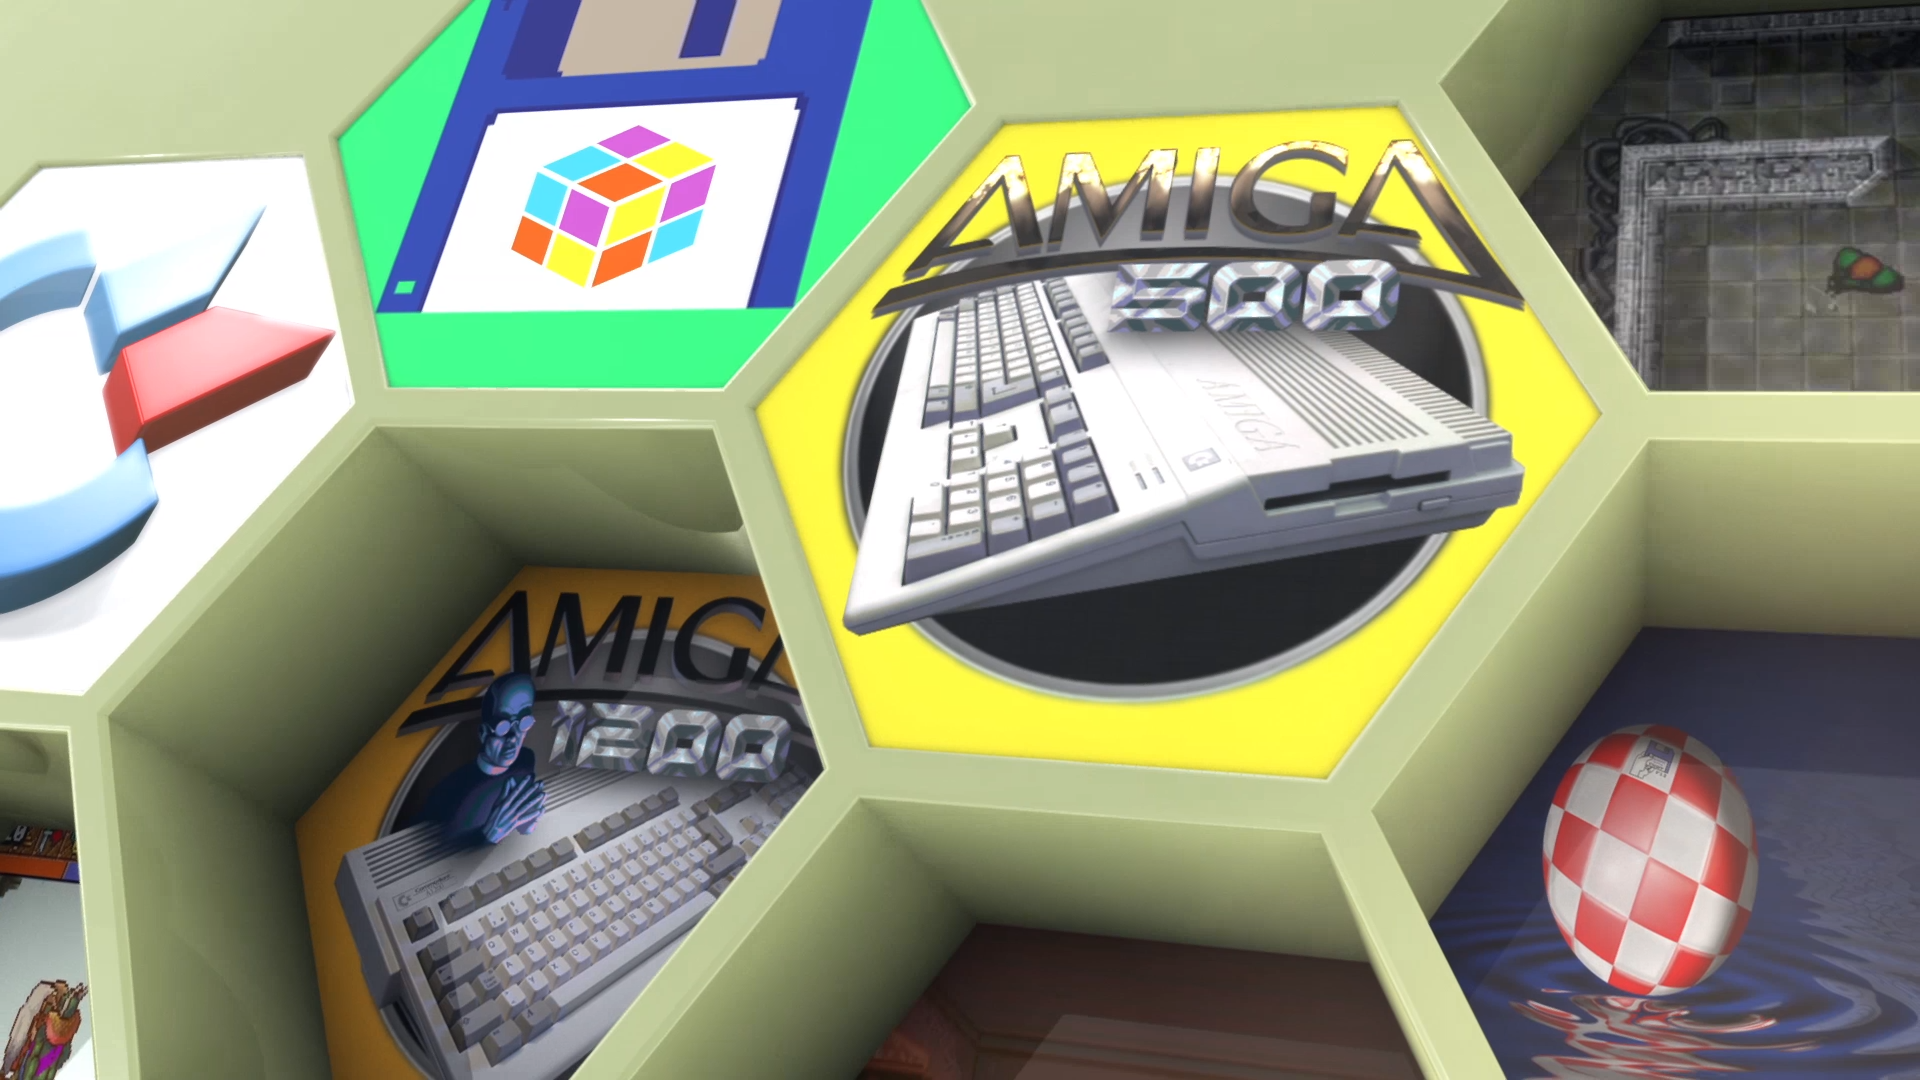 More information about "Amiga Platform Video"